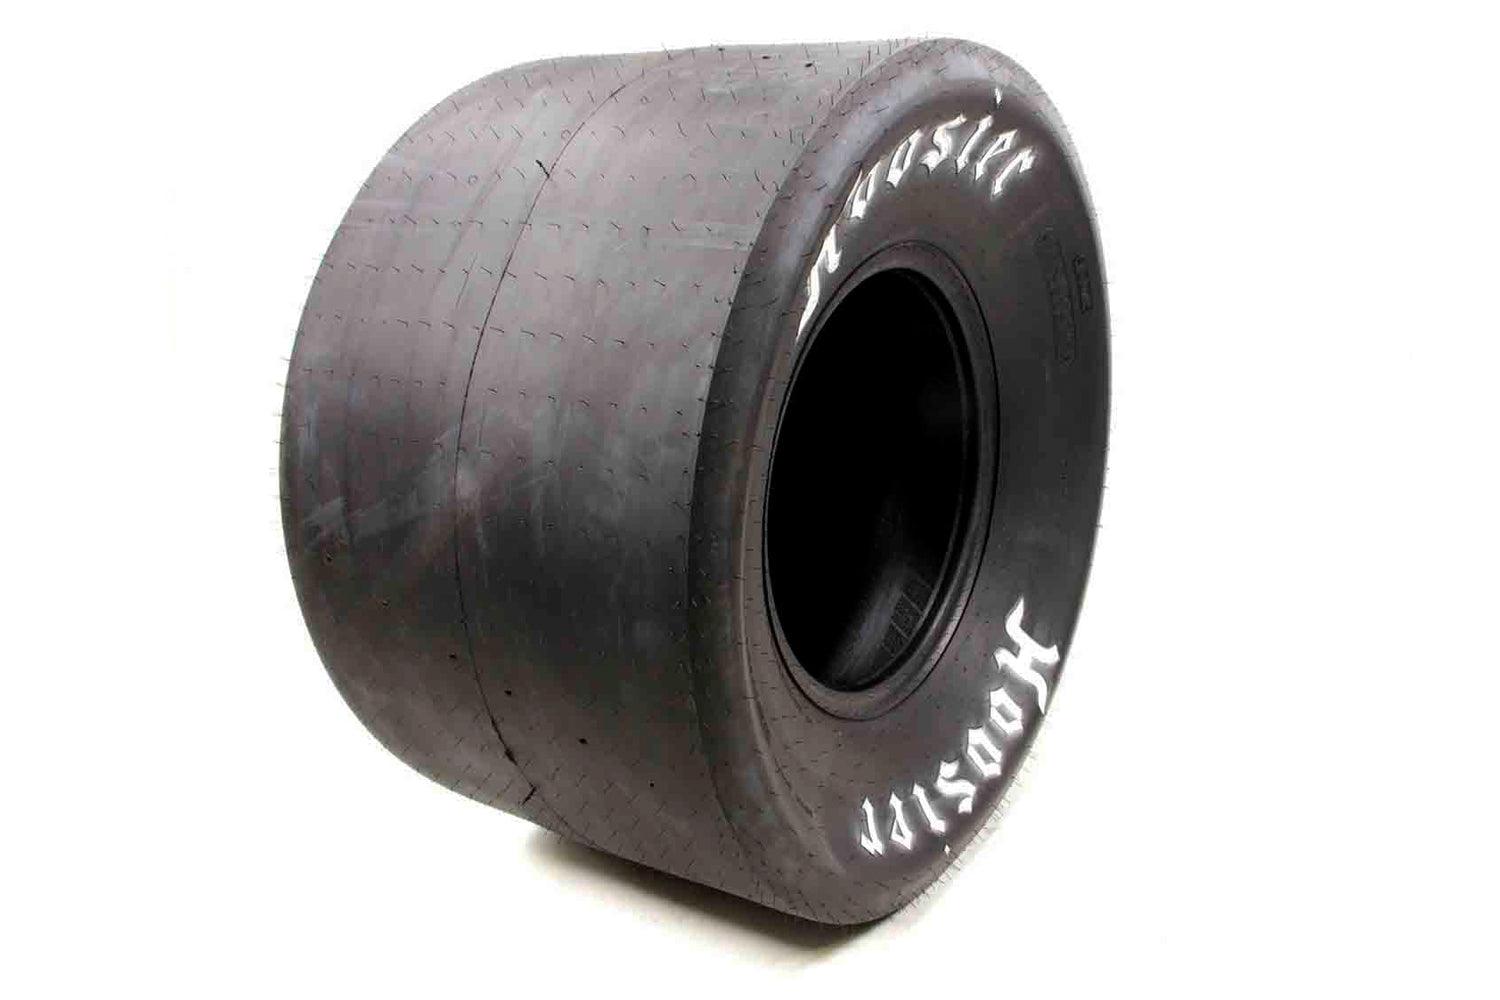 Drag Tire 17.0/36.0-16 C2021 Compound - Burlile Performance Products